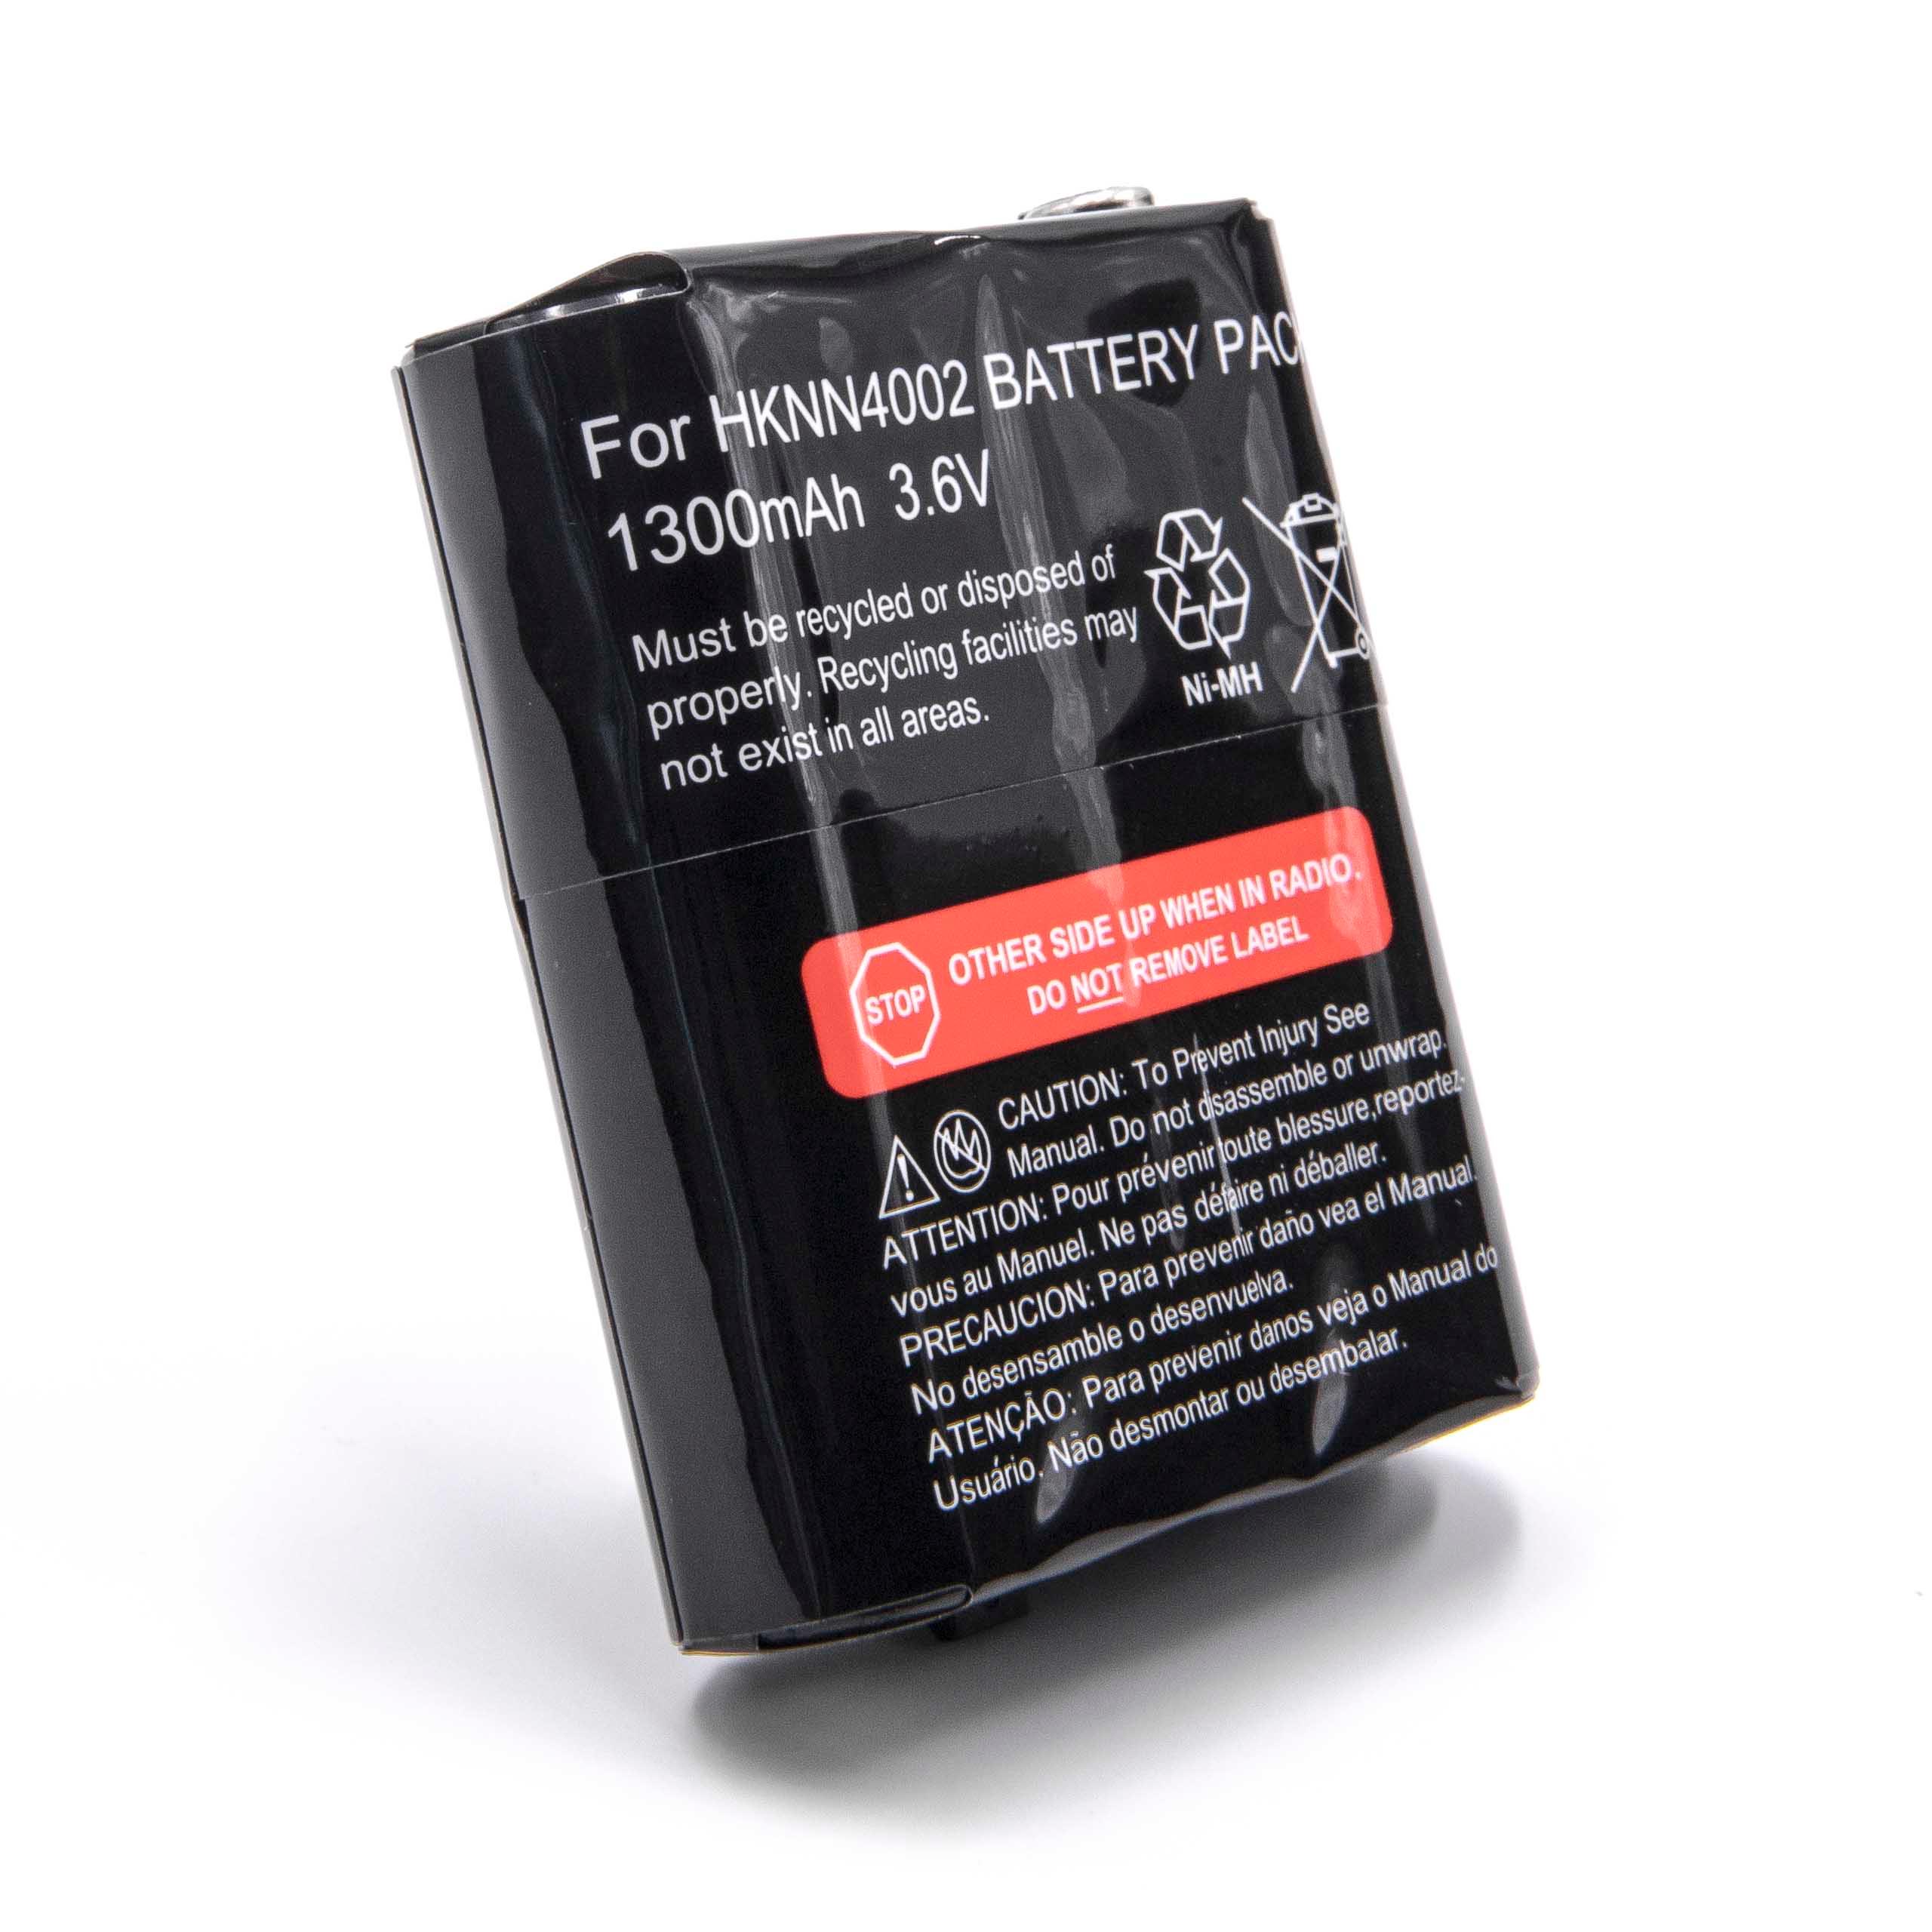 Batería reemplaza Motorola FRS-4002A, 56315, 4002A para radio, walkie-talkie Motorola - 1300 mAh 3,6 V NiMH